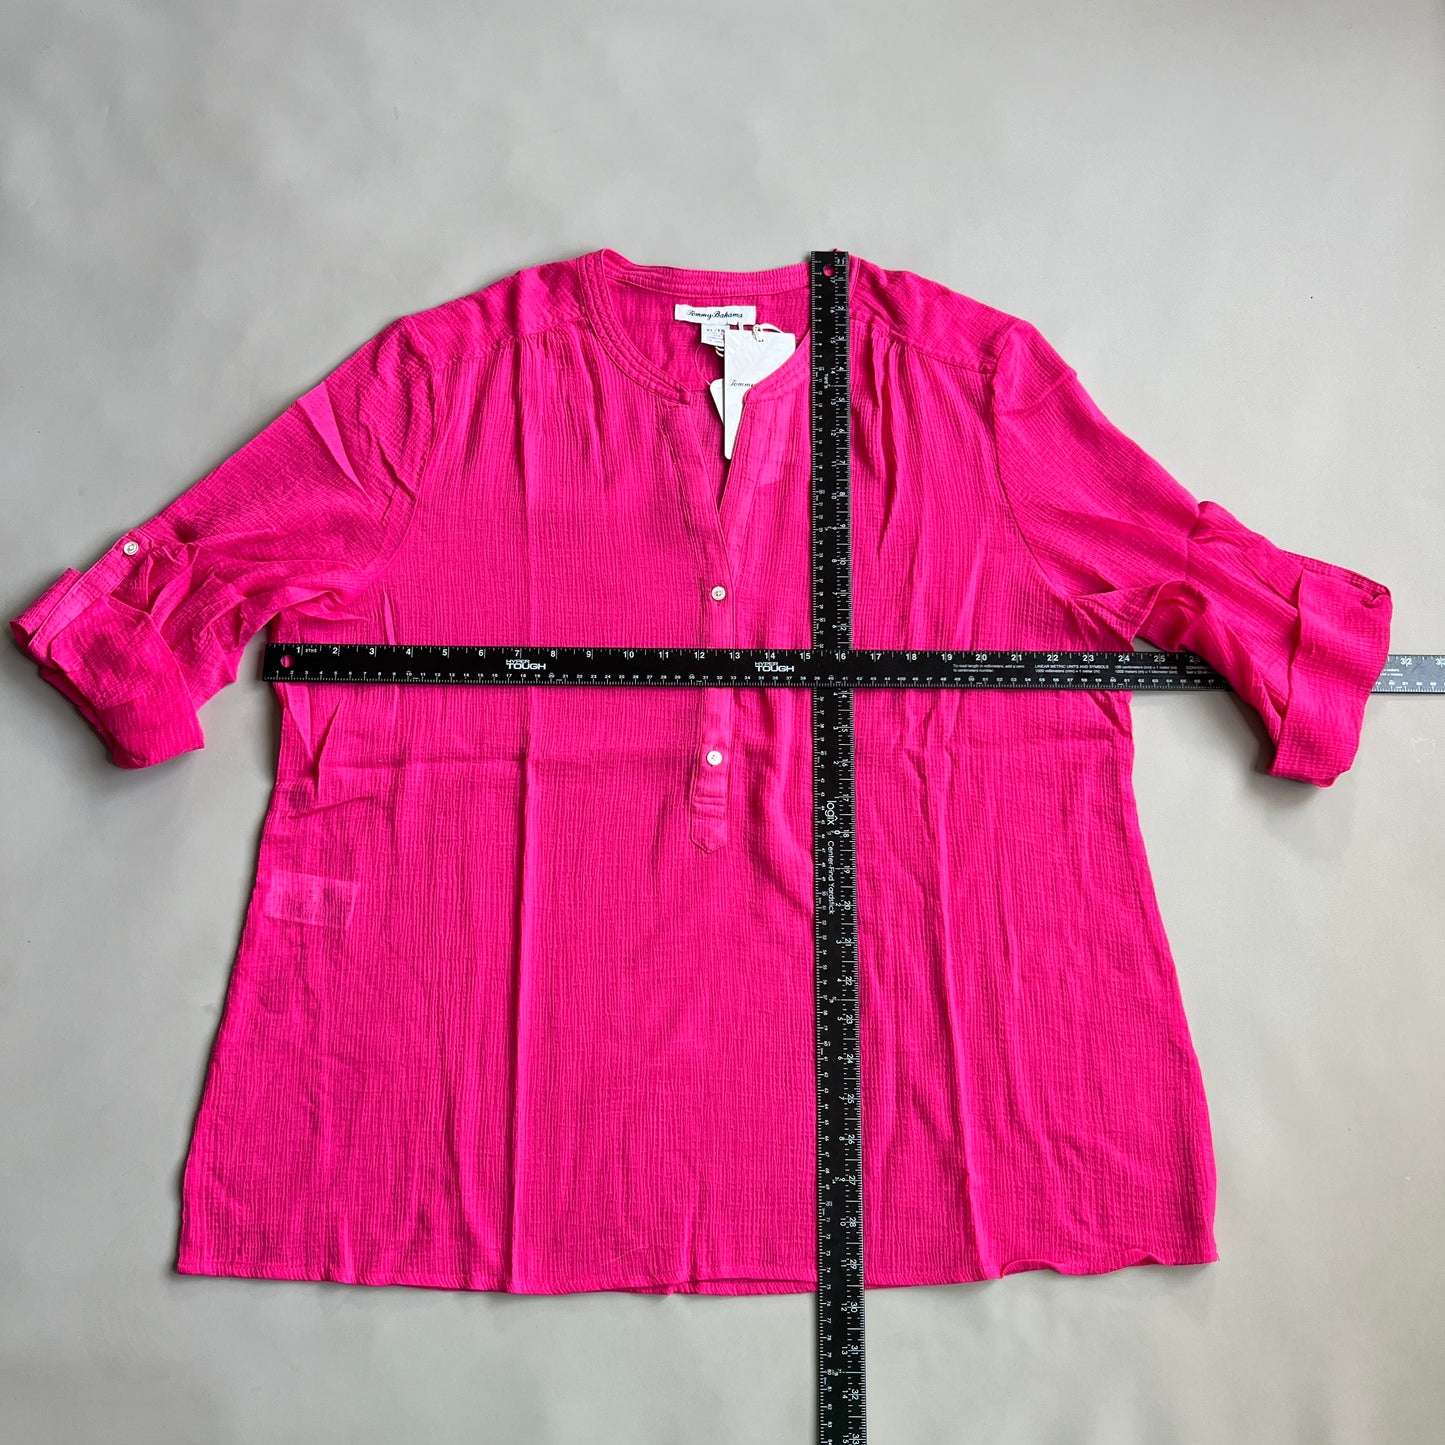 TOMMY BAHAMA Women's Coastview Gauze Top 3/4 Sleeve Rose Bed Size XL (New)